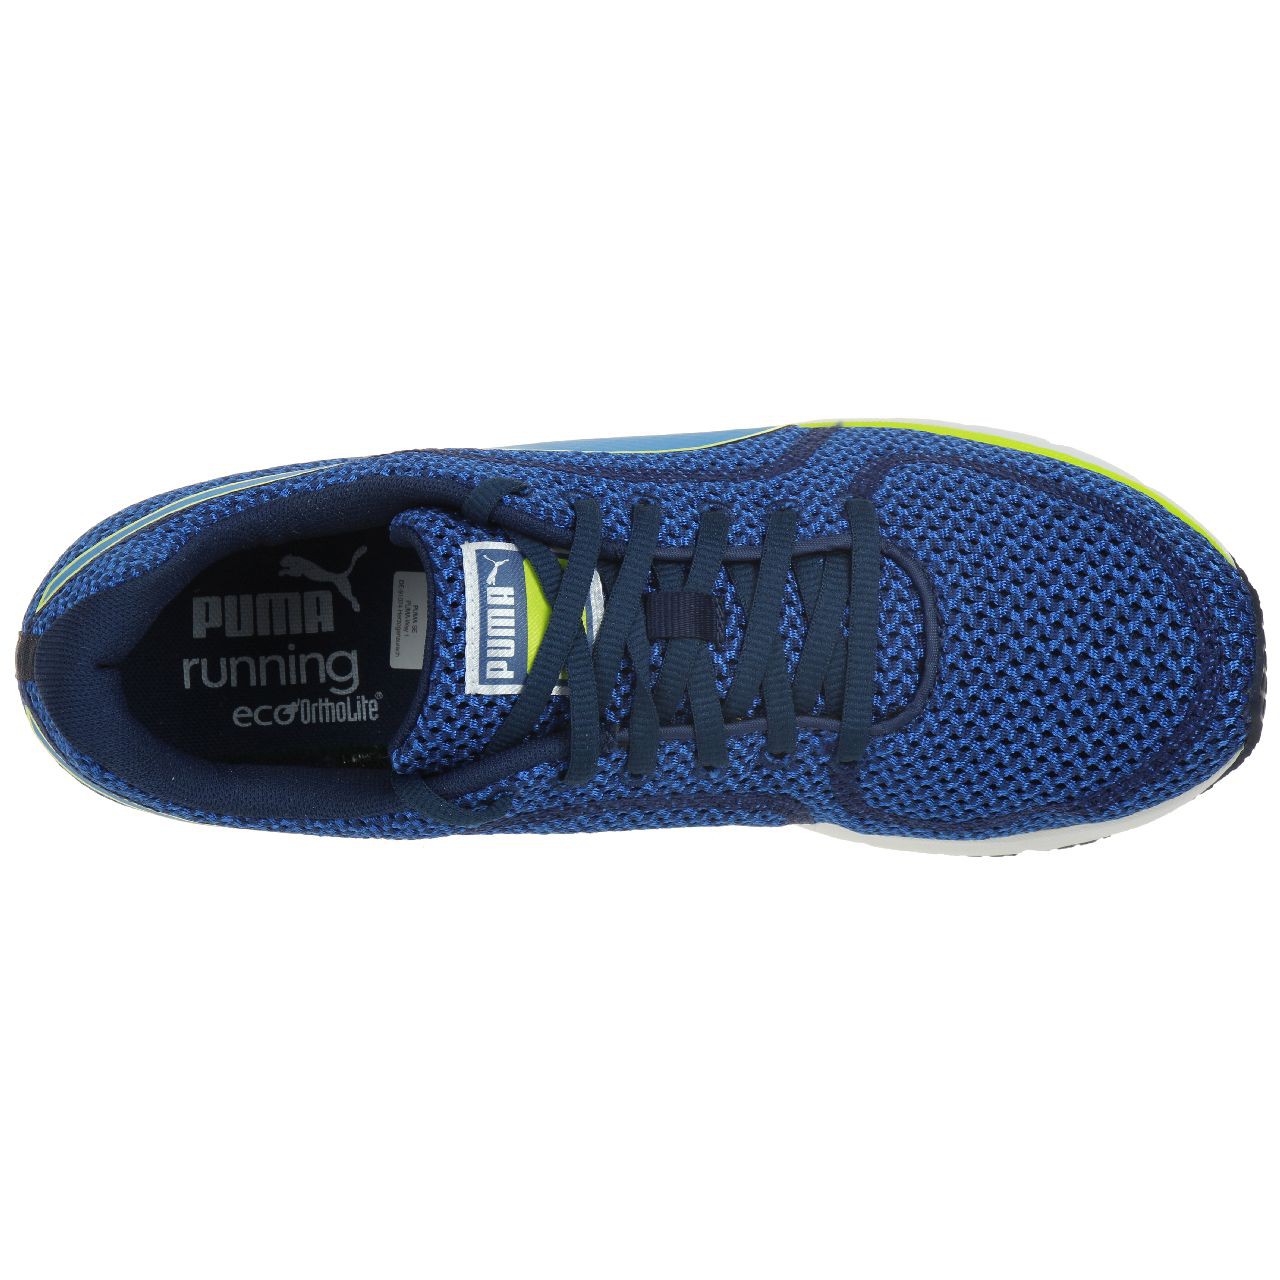 Puma Narita v3 Knit Joggingschuhe Herren Fitnessschuhe 188429 01 blau